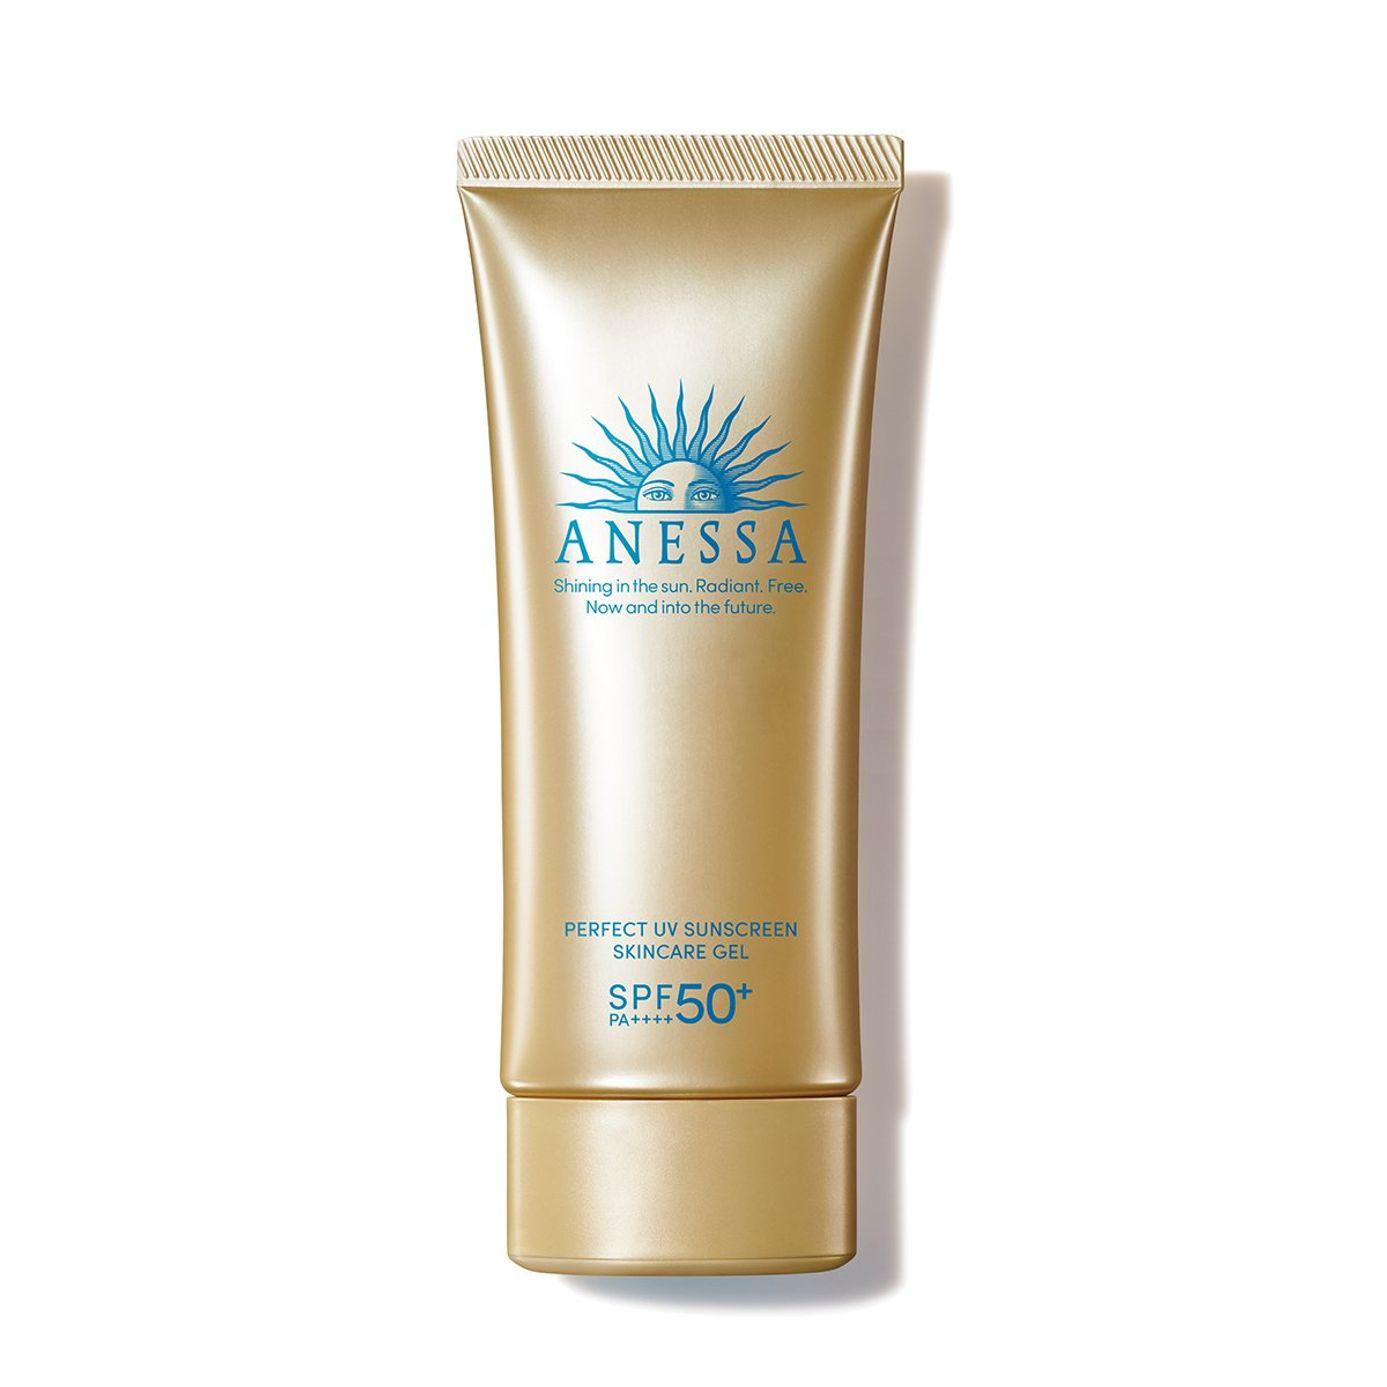 Anessa Perfect UV Sunscreen Skincare Gel SPF50+, Pa++++